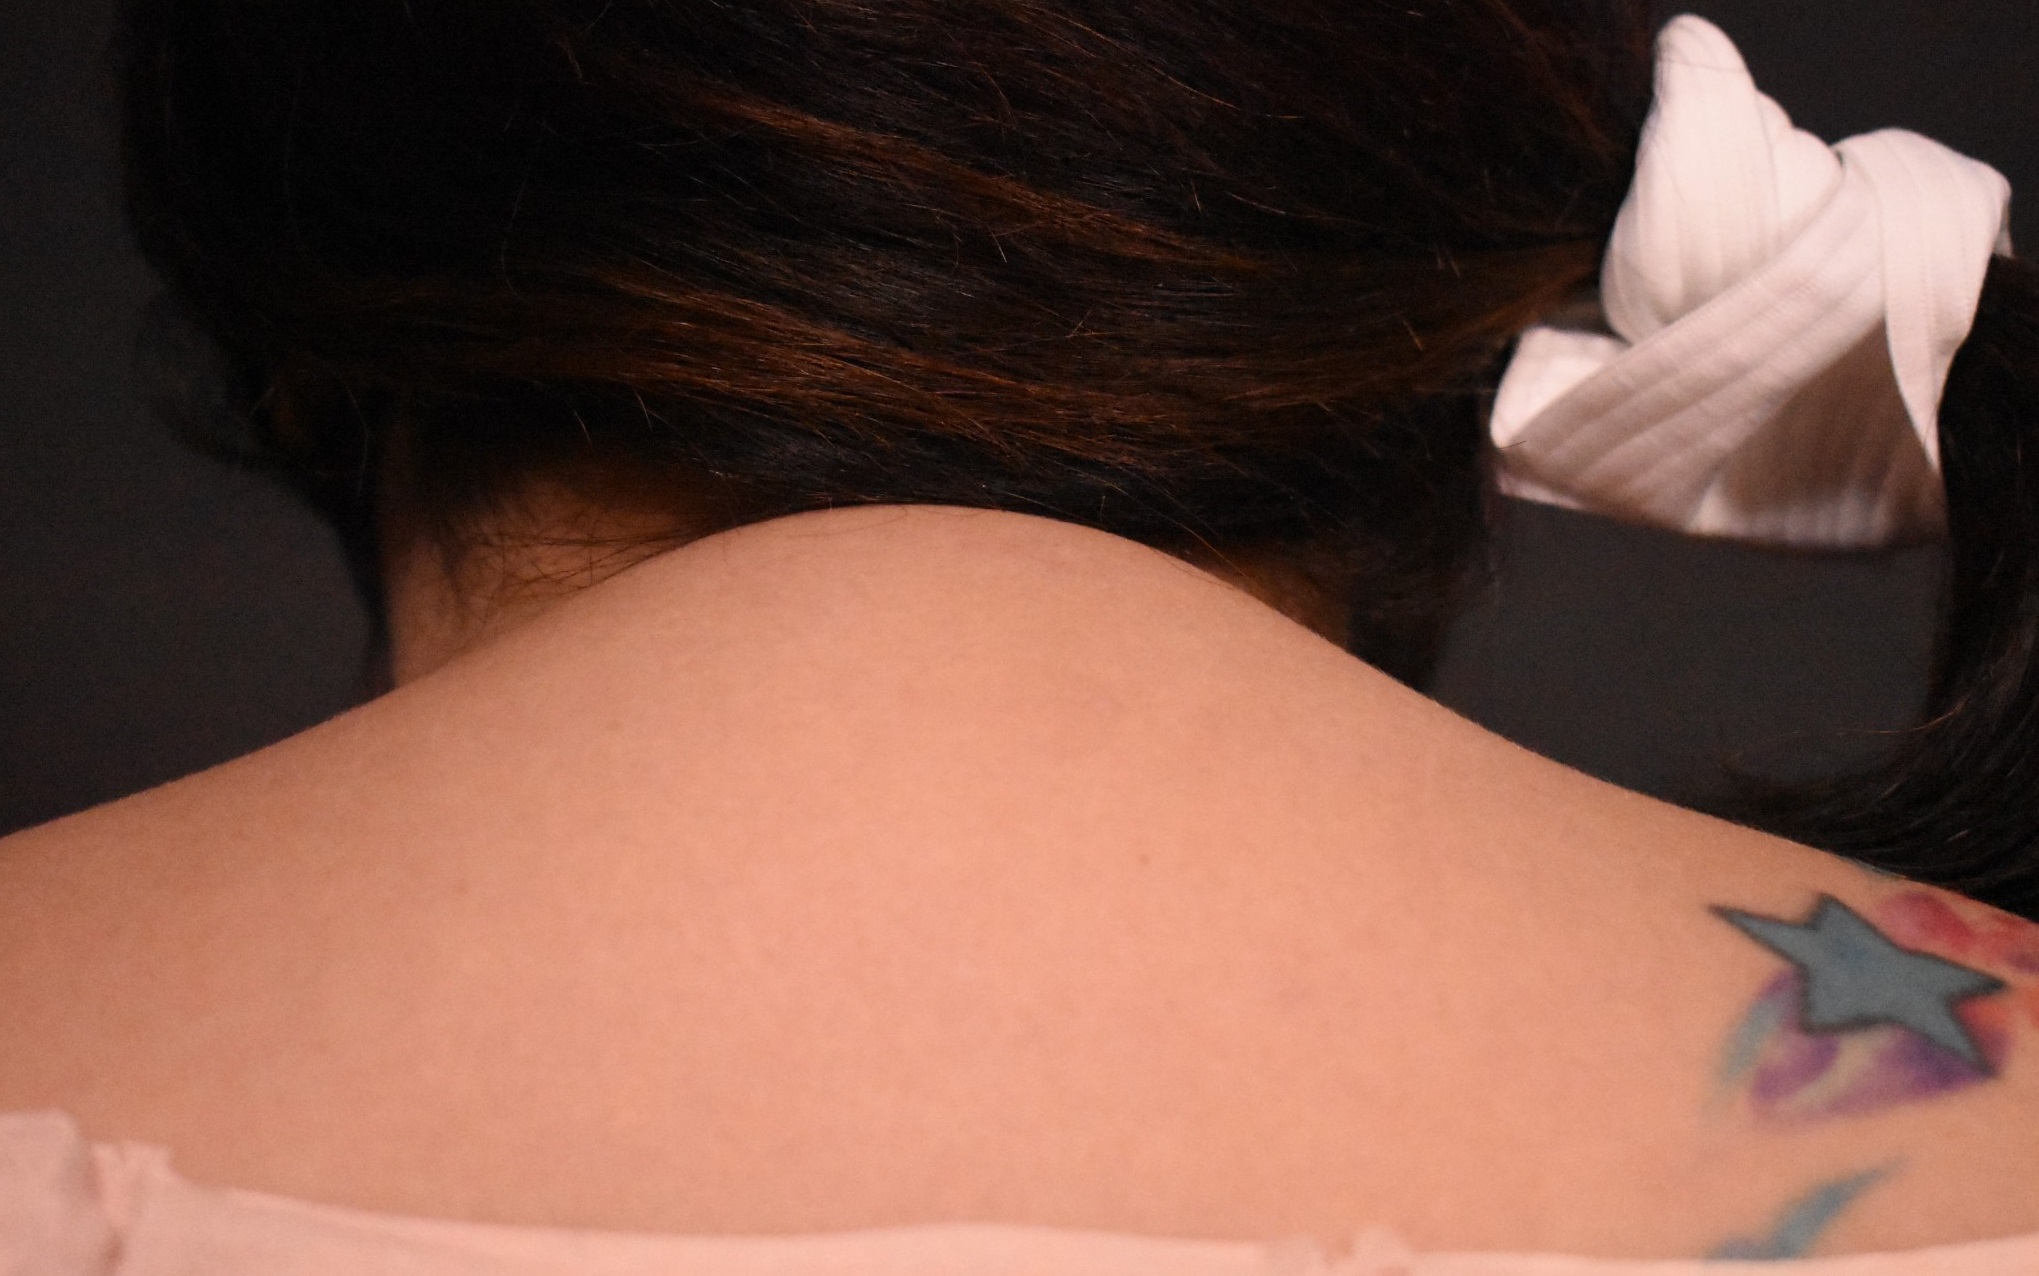 before liposuction back view female patient case 7113